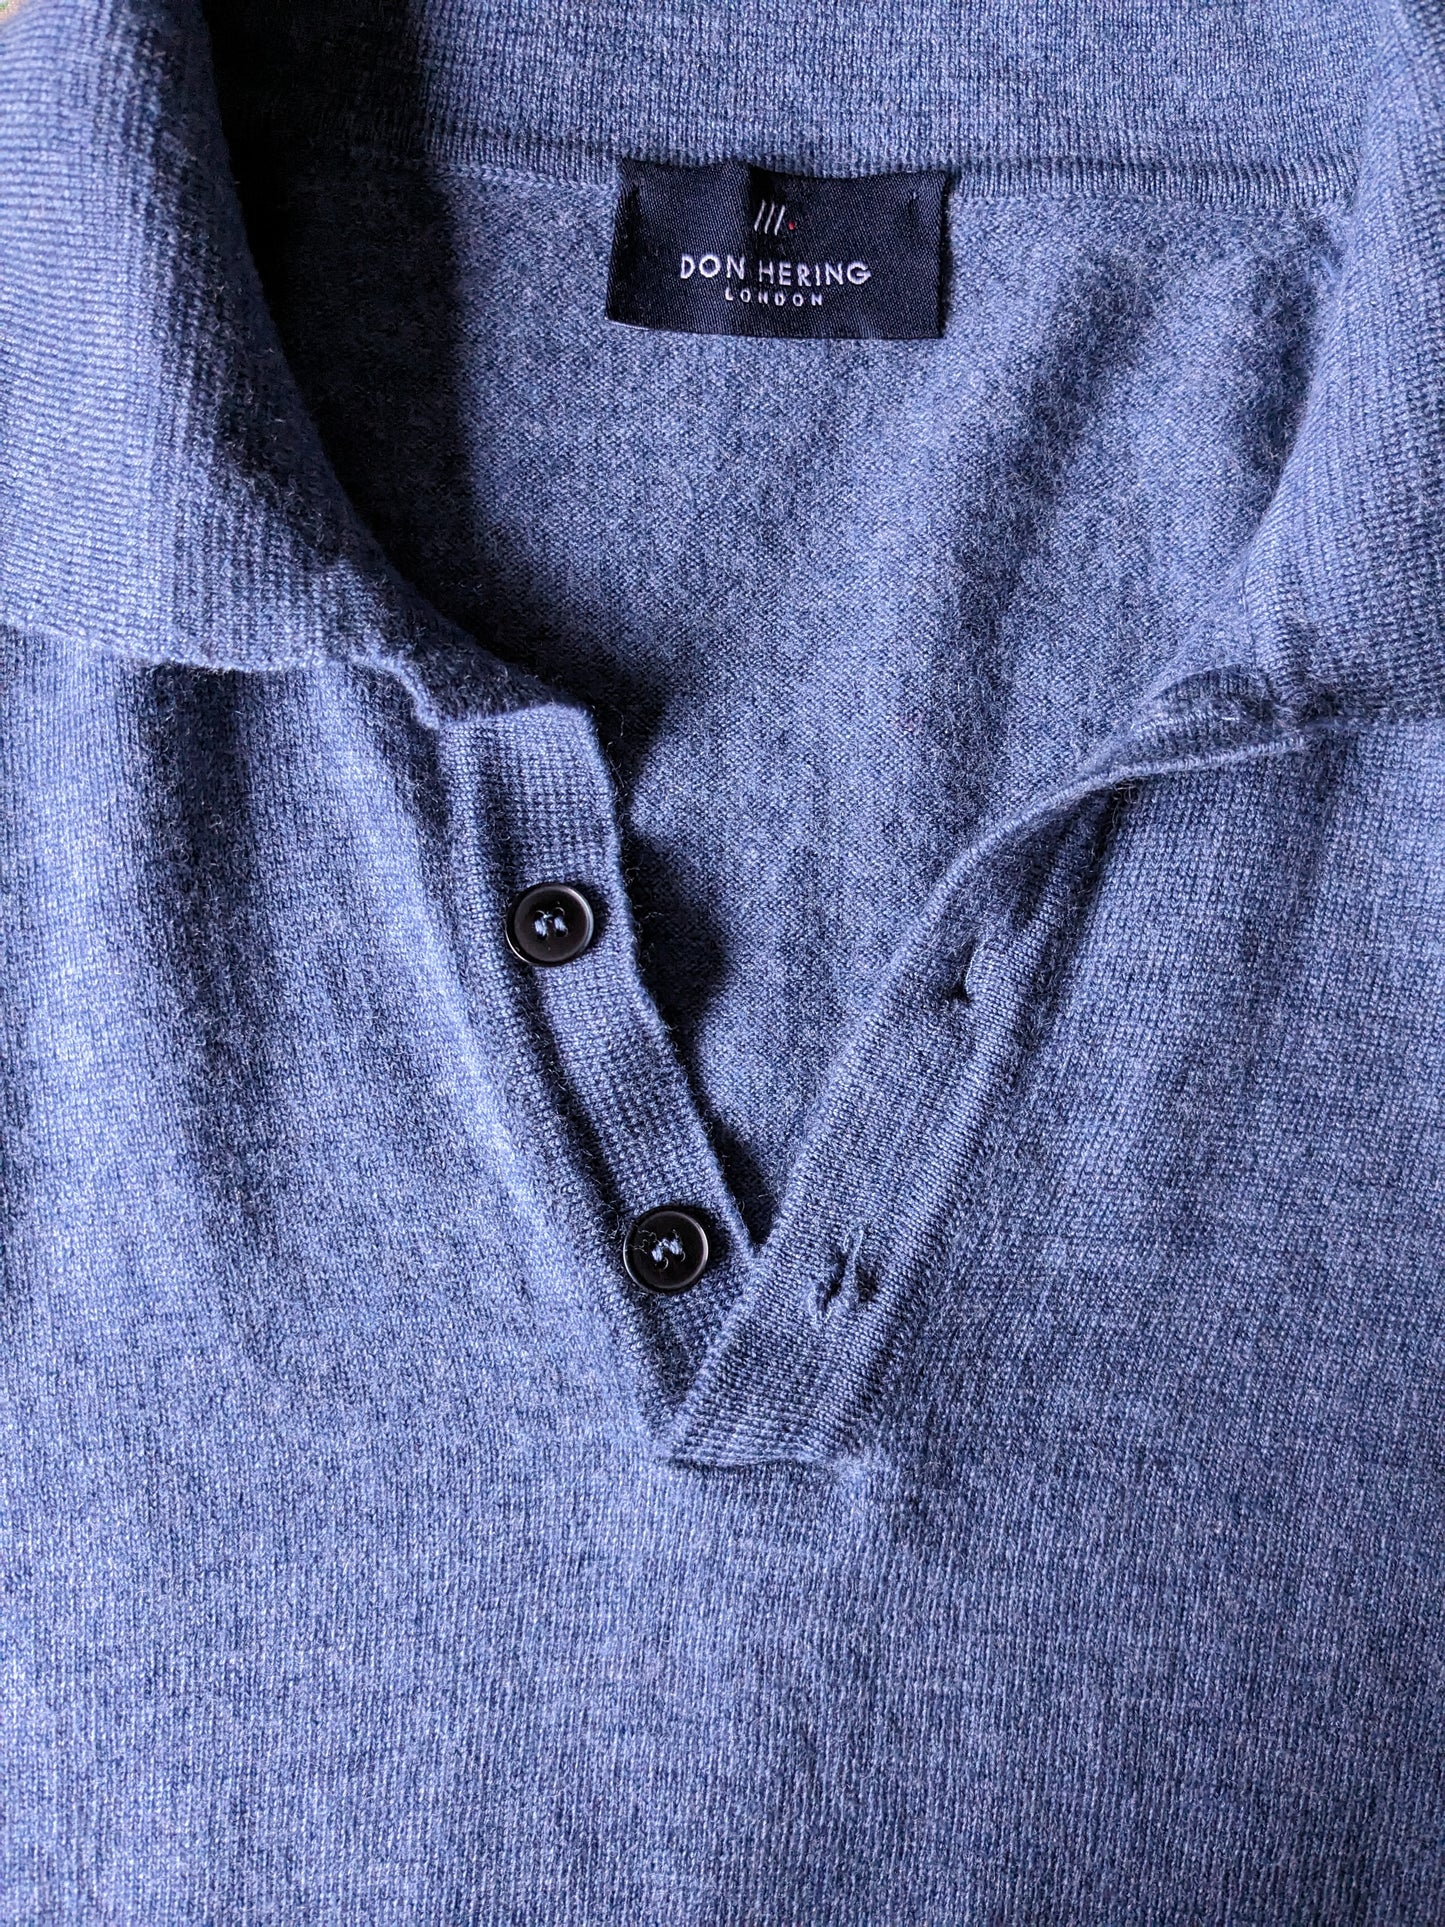 Don Hising Merino Wool Polo suéter. Azul mezclado. Tamaño S.